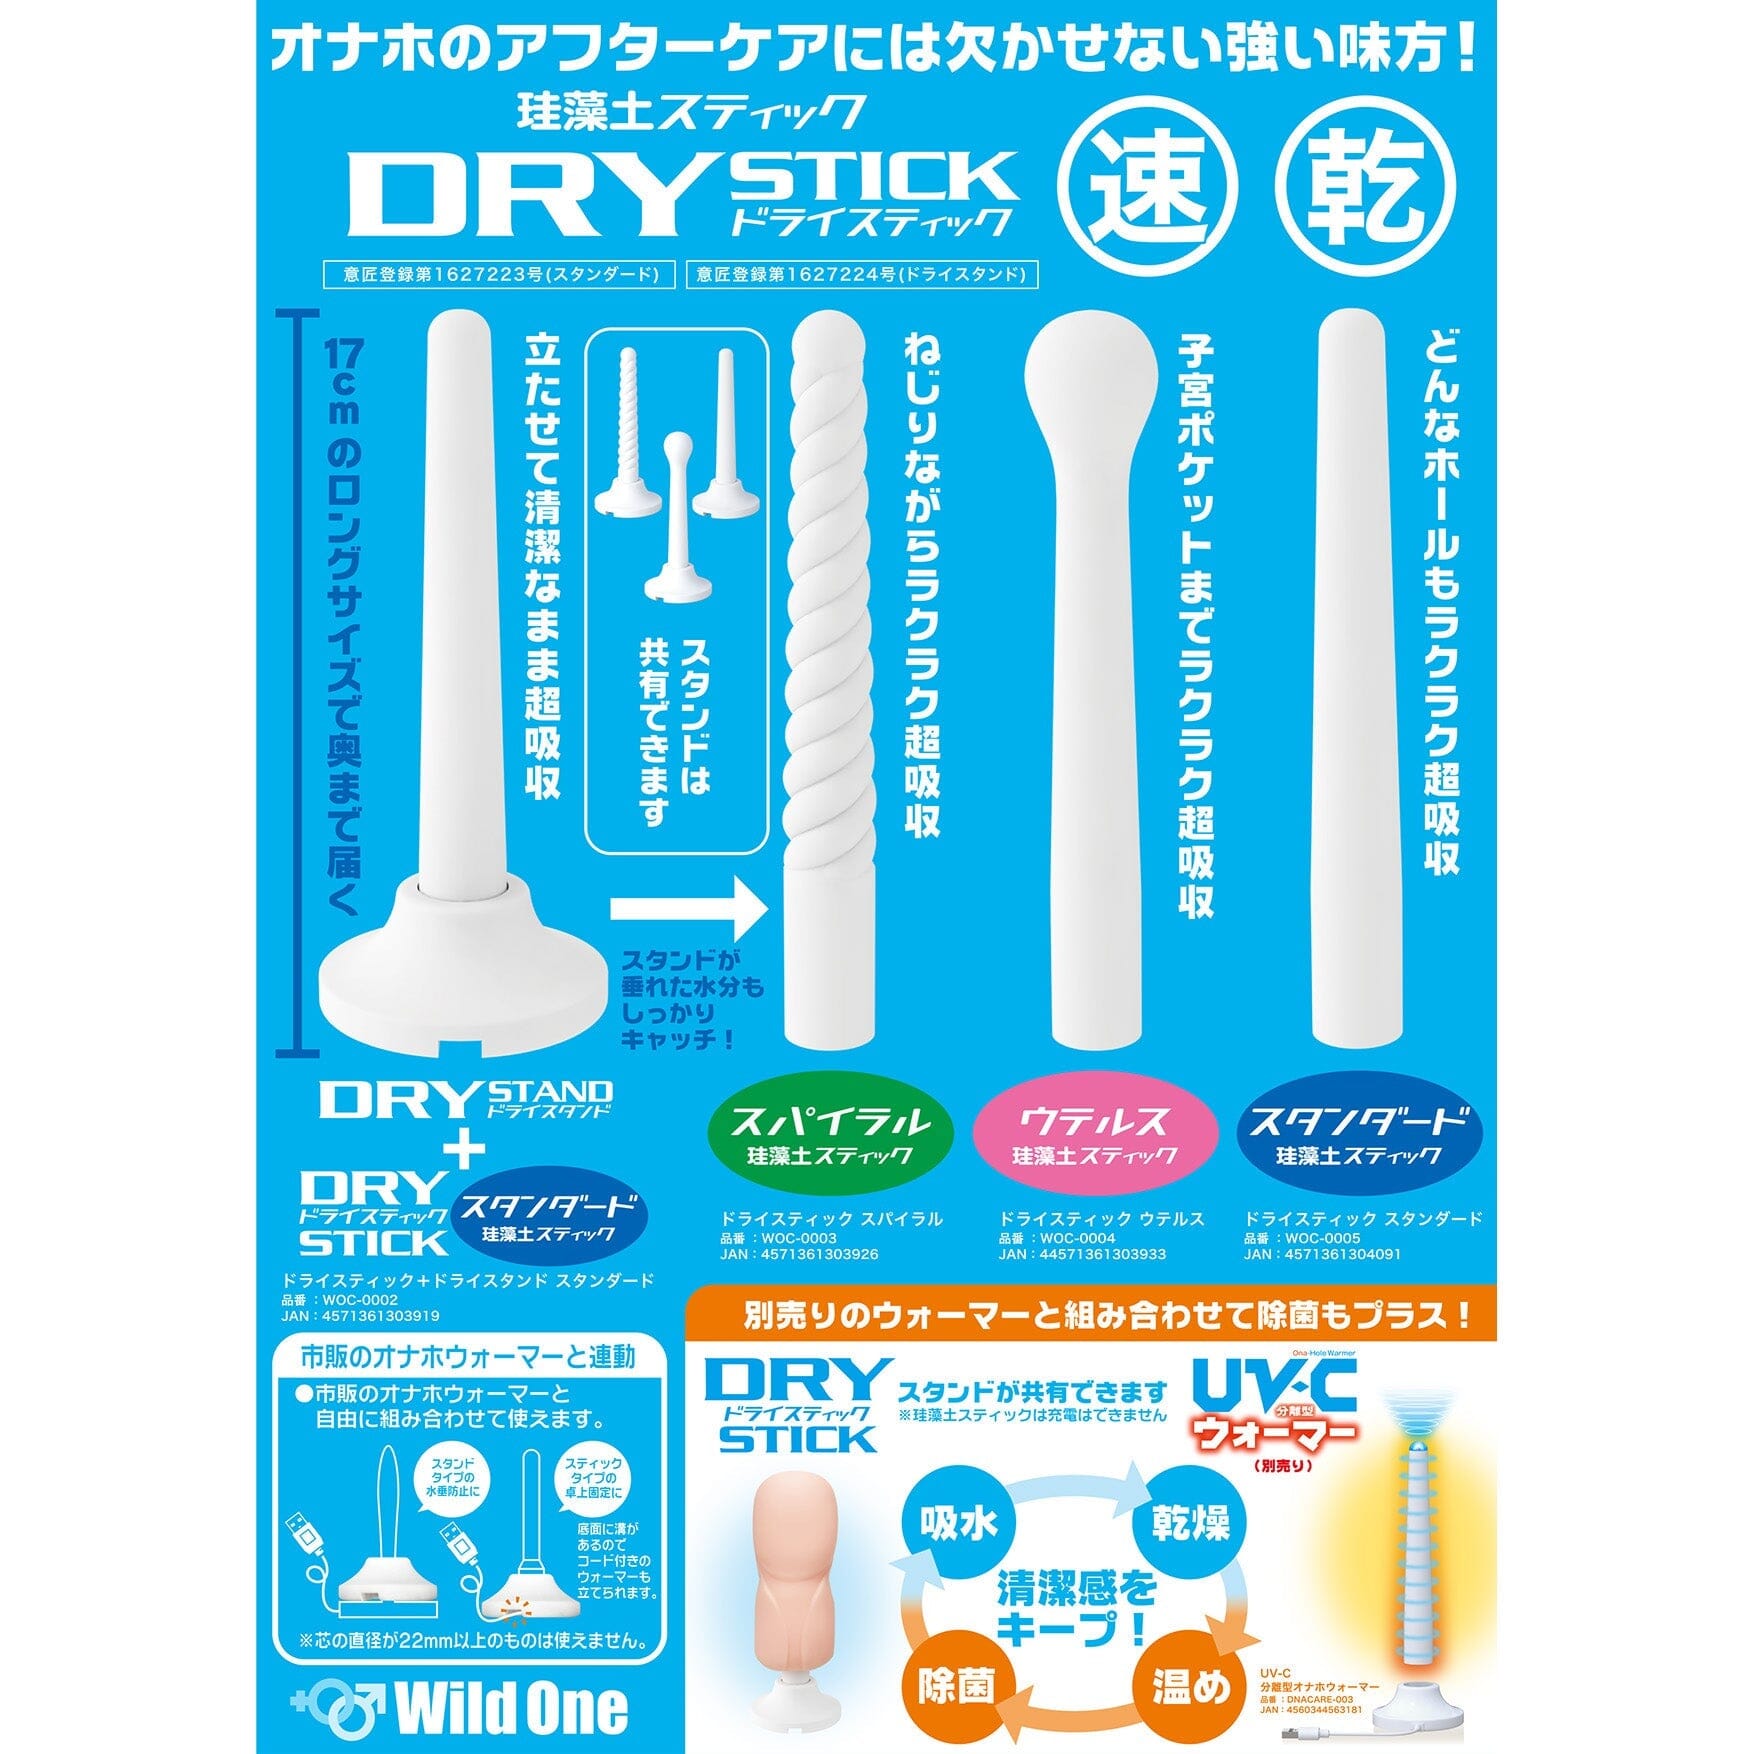 DNA JAPAN Dry Stick 速乾珪藻土螺旋吸濕棒 情趣用品清潔及配件 購買